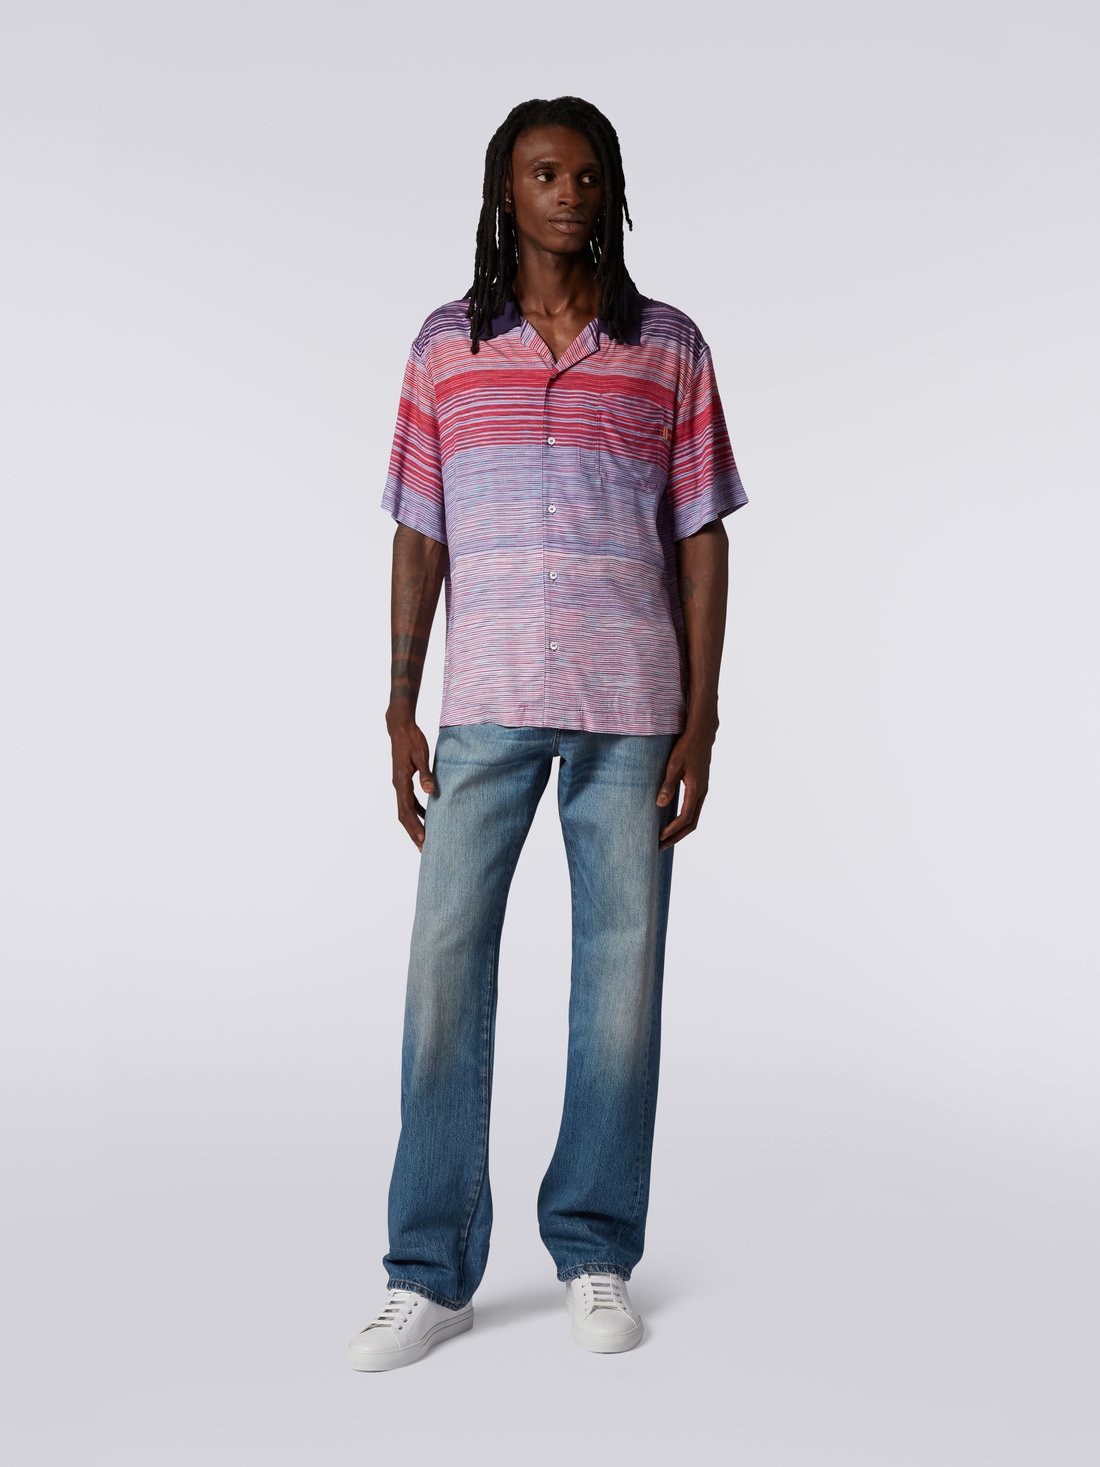 Short-sleeved cotton bowling shirt, Red, Purple & Light Blue - US23SJ0RBW00M5F402H - 1